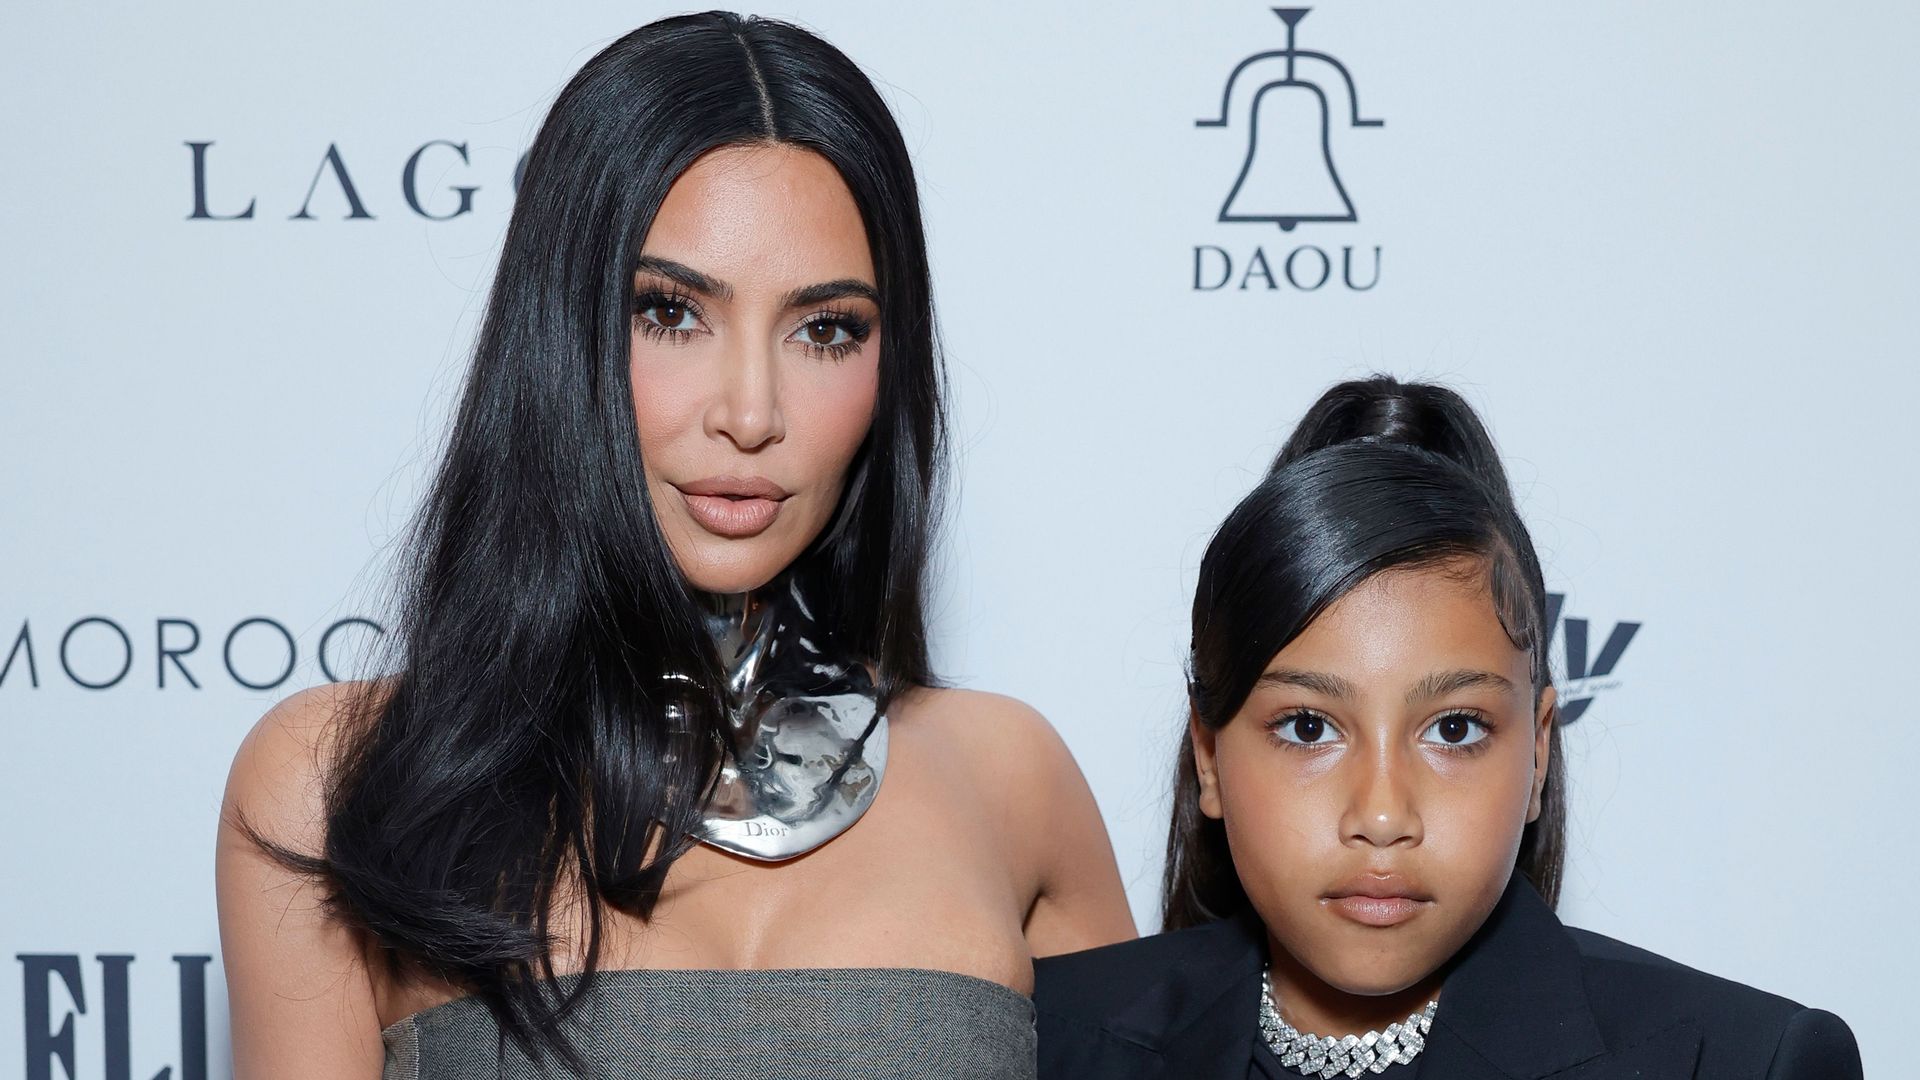 Kim Kardashian’s 10yearold daughter North West's insane potential